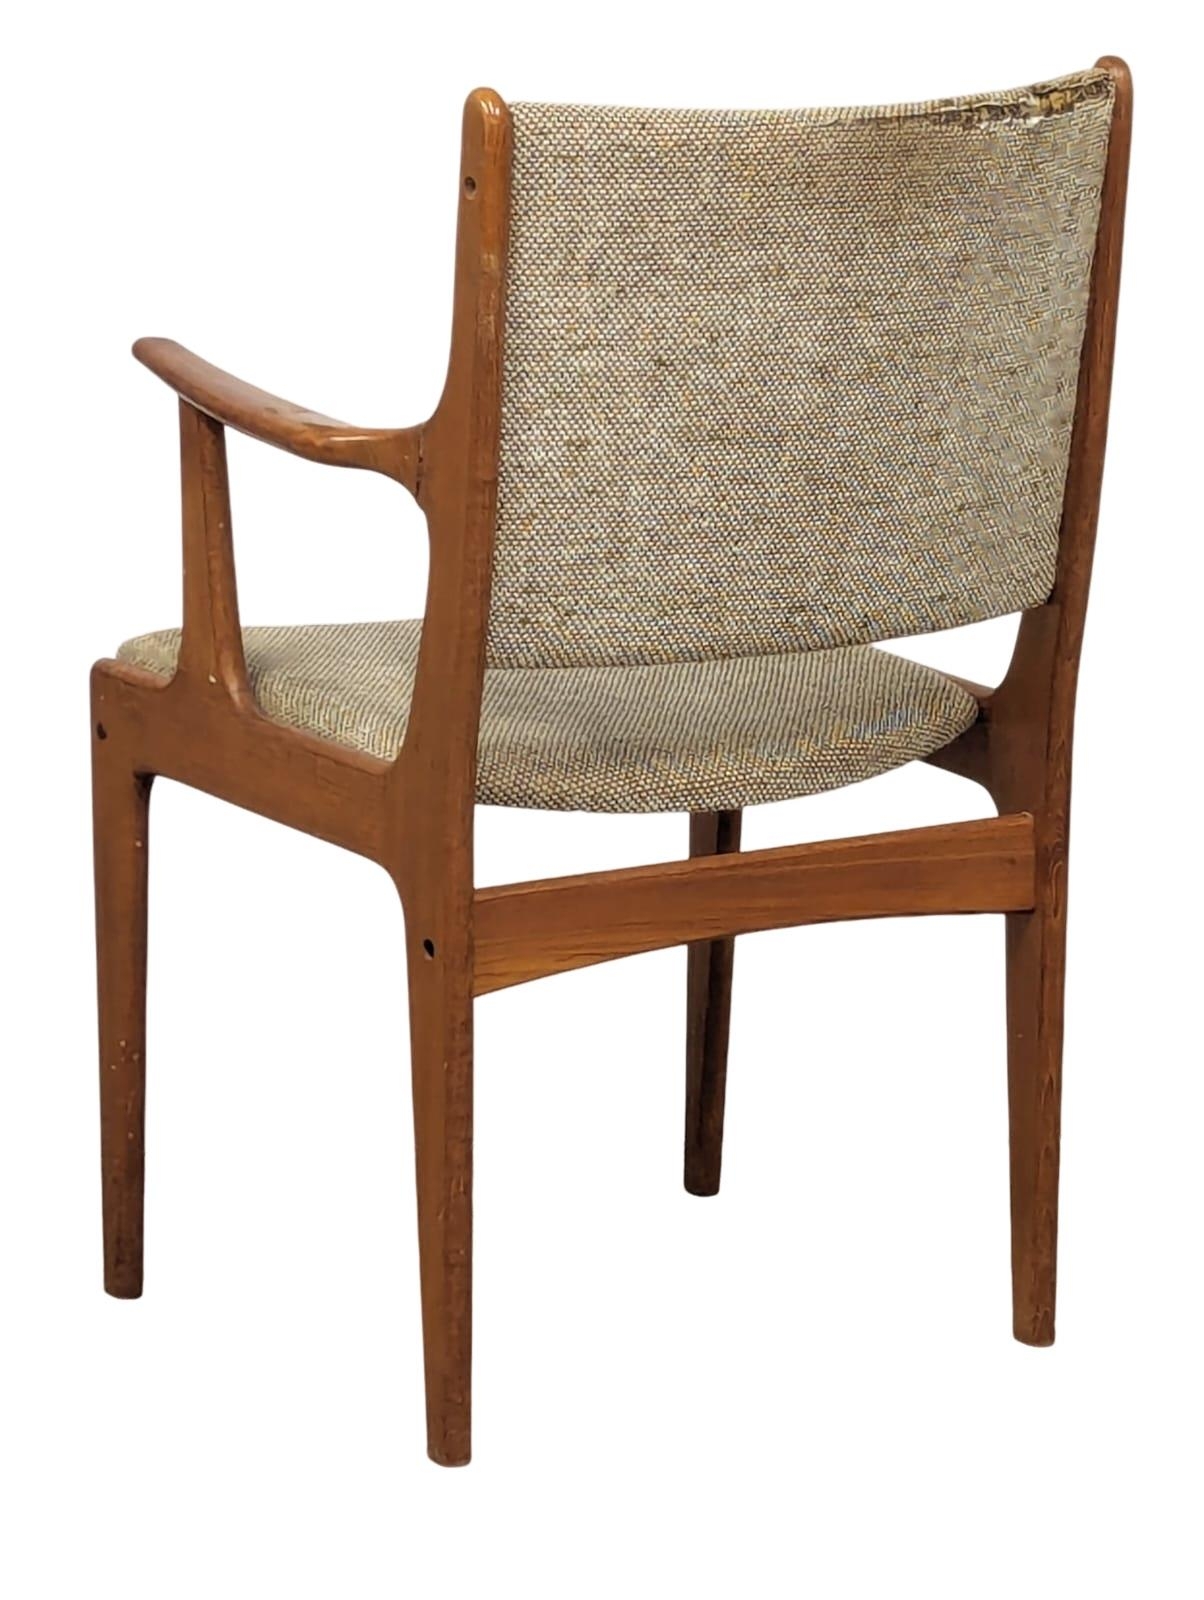 A Danish Mid Century teak armchair designed by Johannes Andersen. - Image 4 of 6